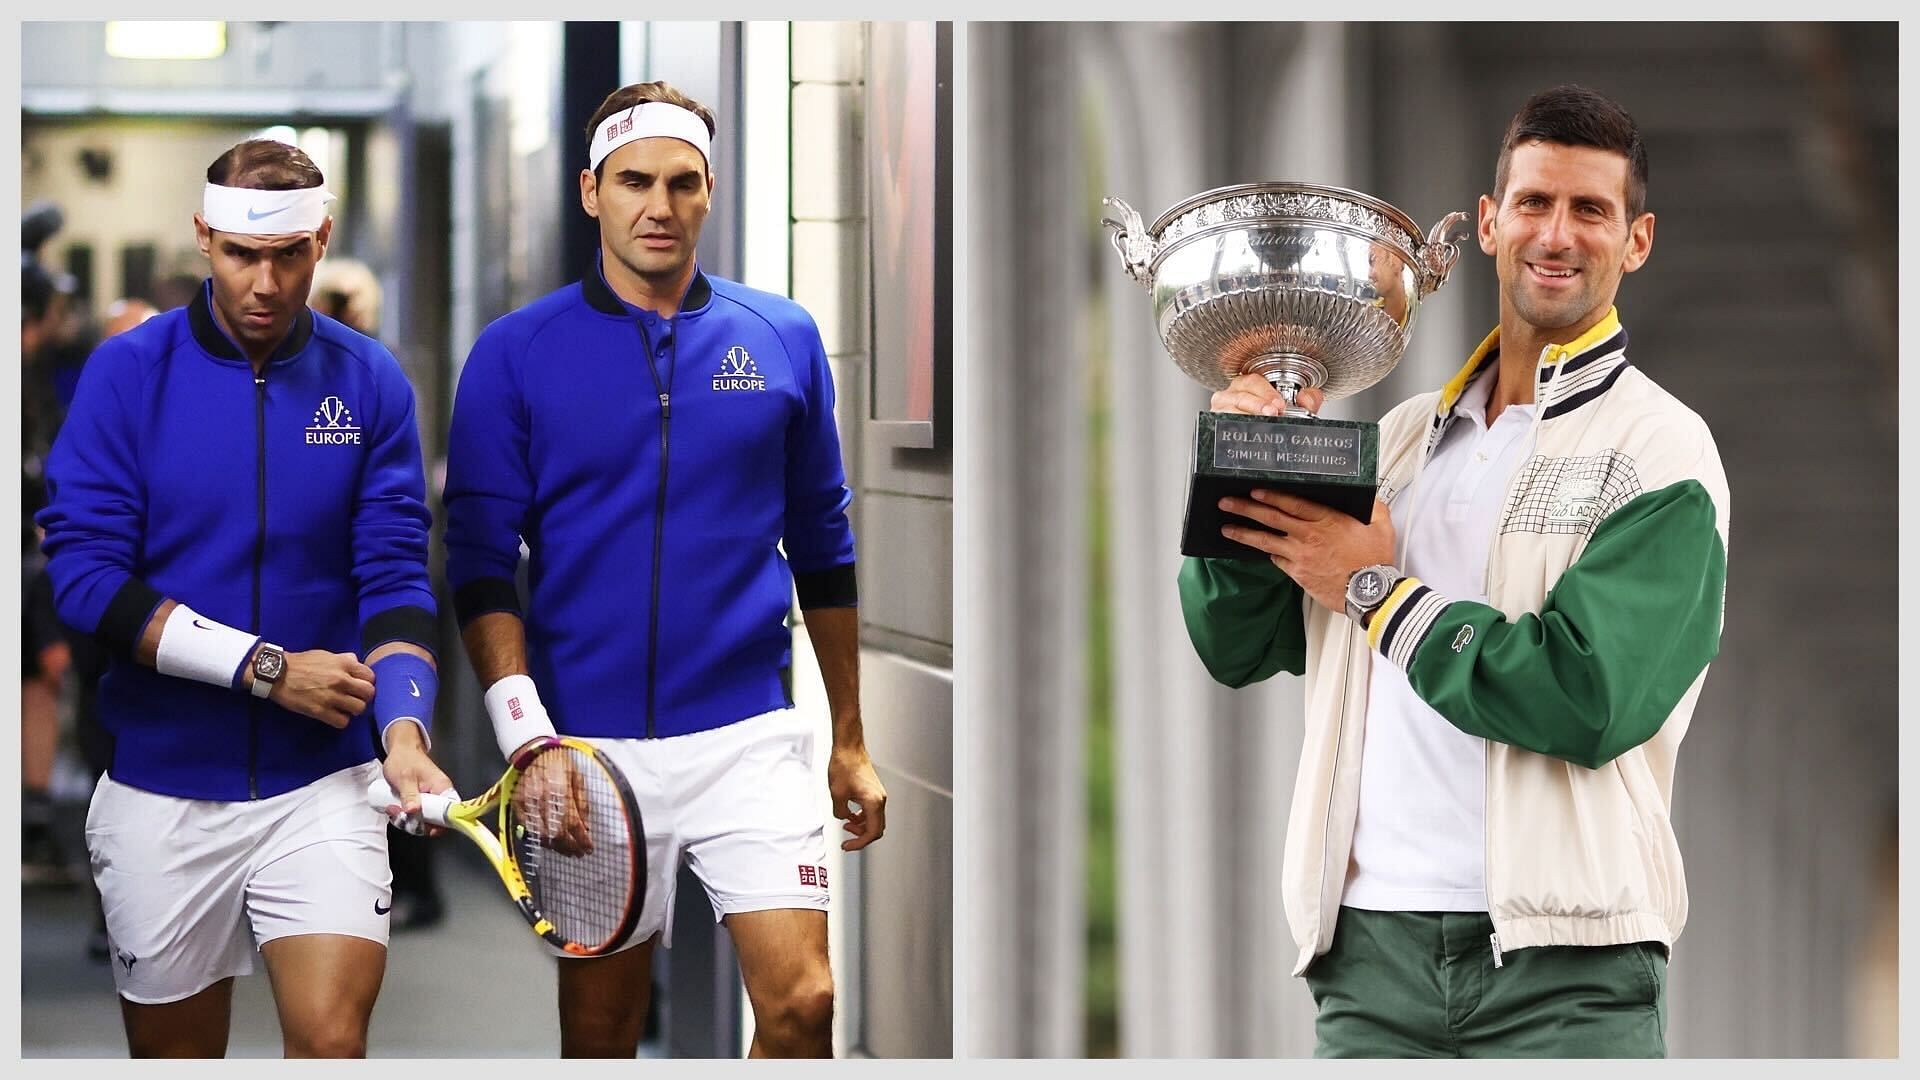 Rafael Nadal, Roger Federer and Novak Djokovic